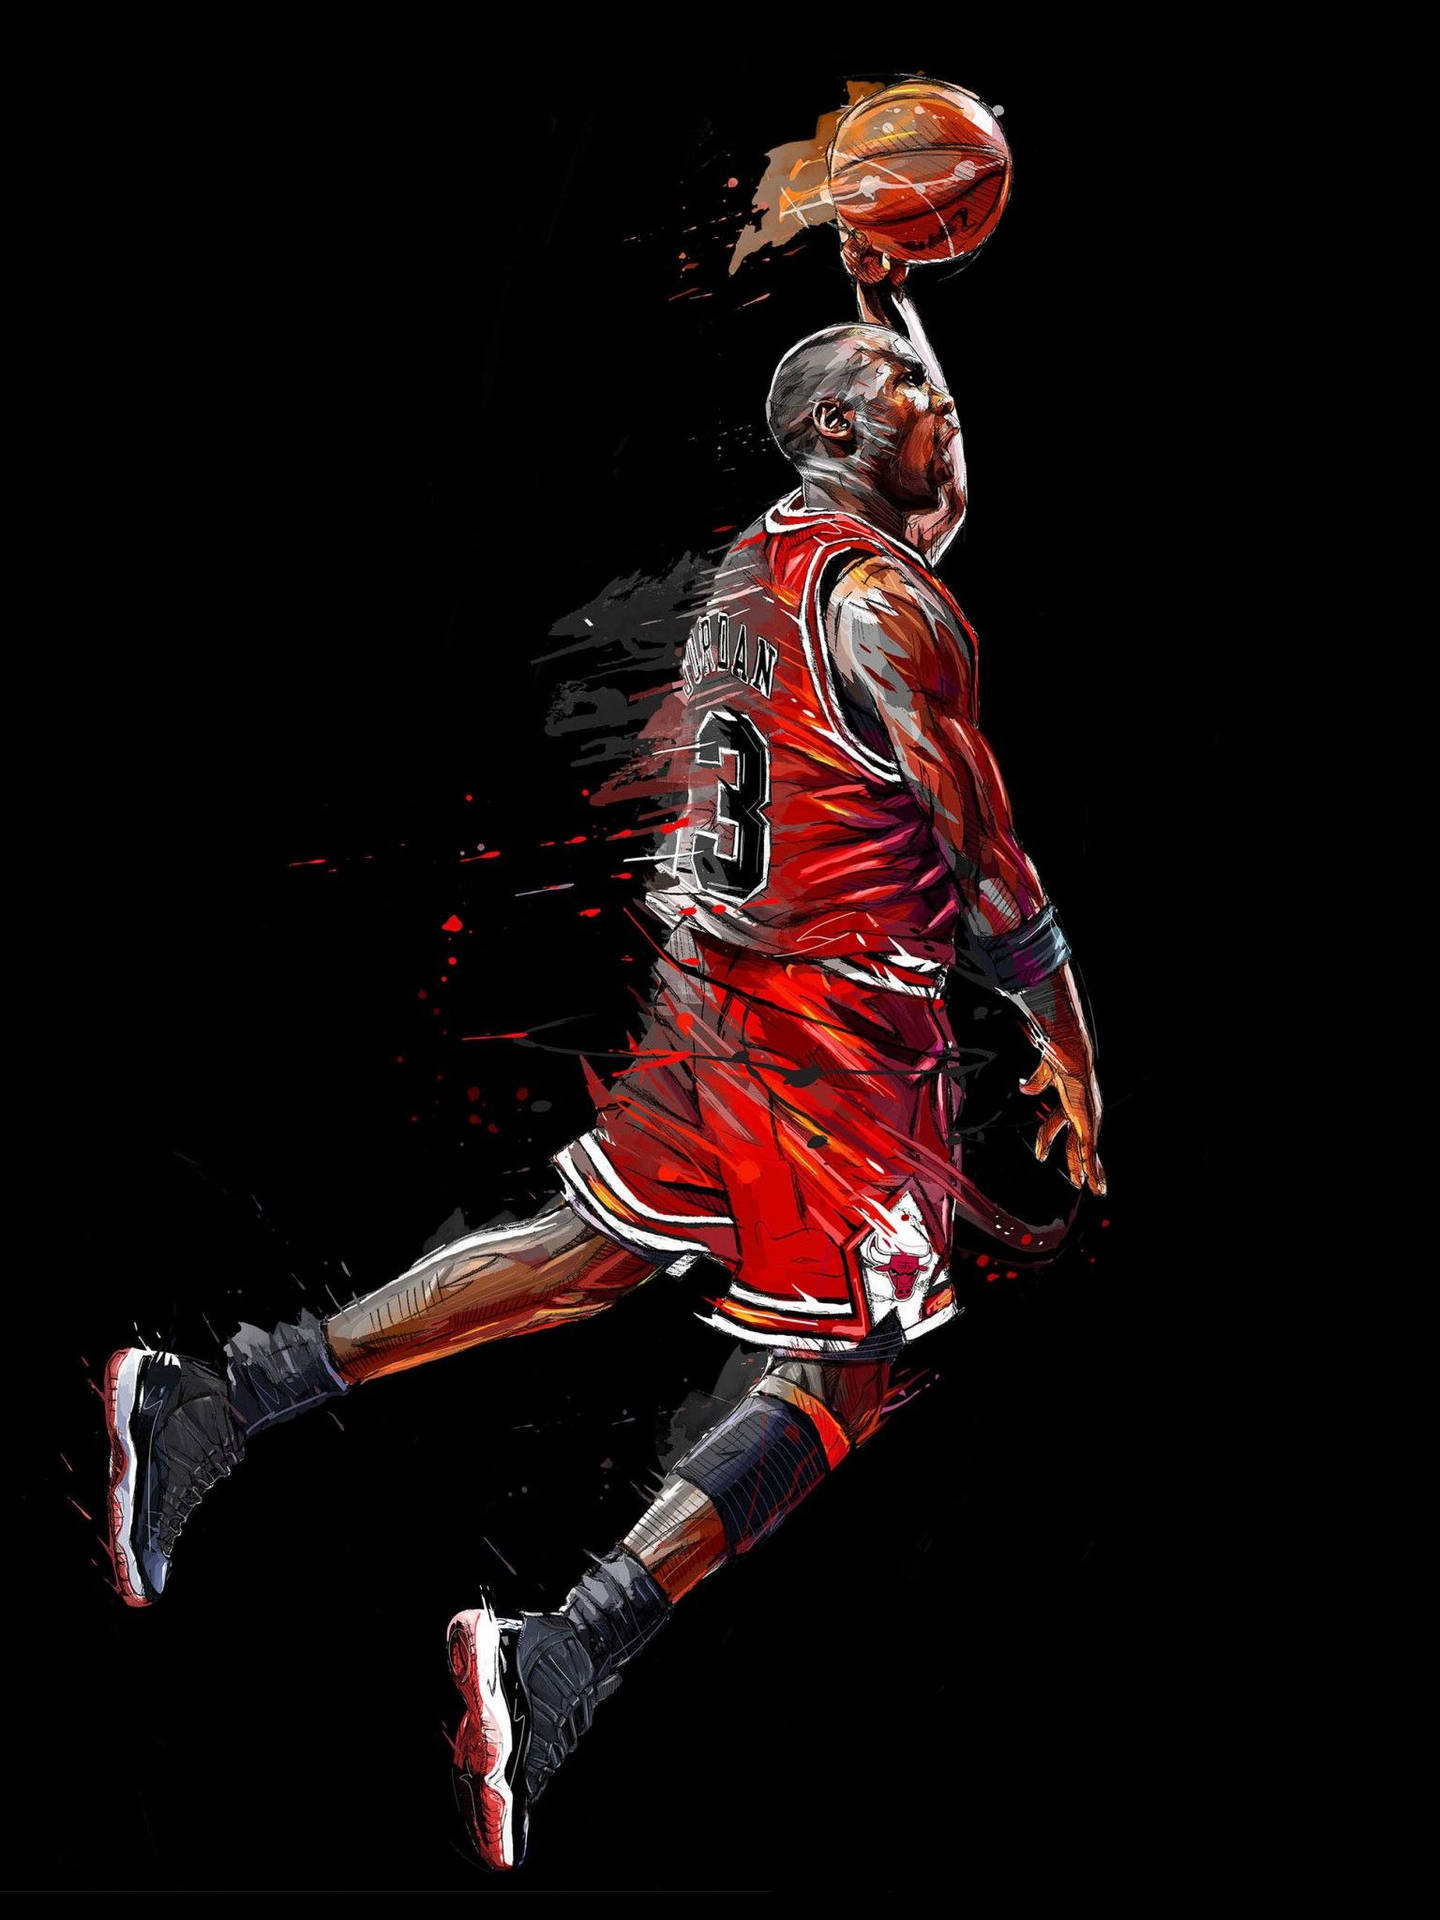 6 epic Michael Jordan cards that captures his legendary career